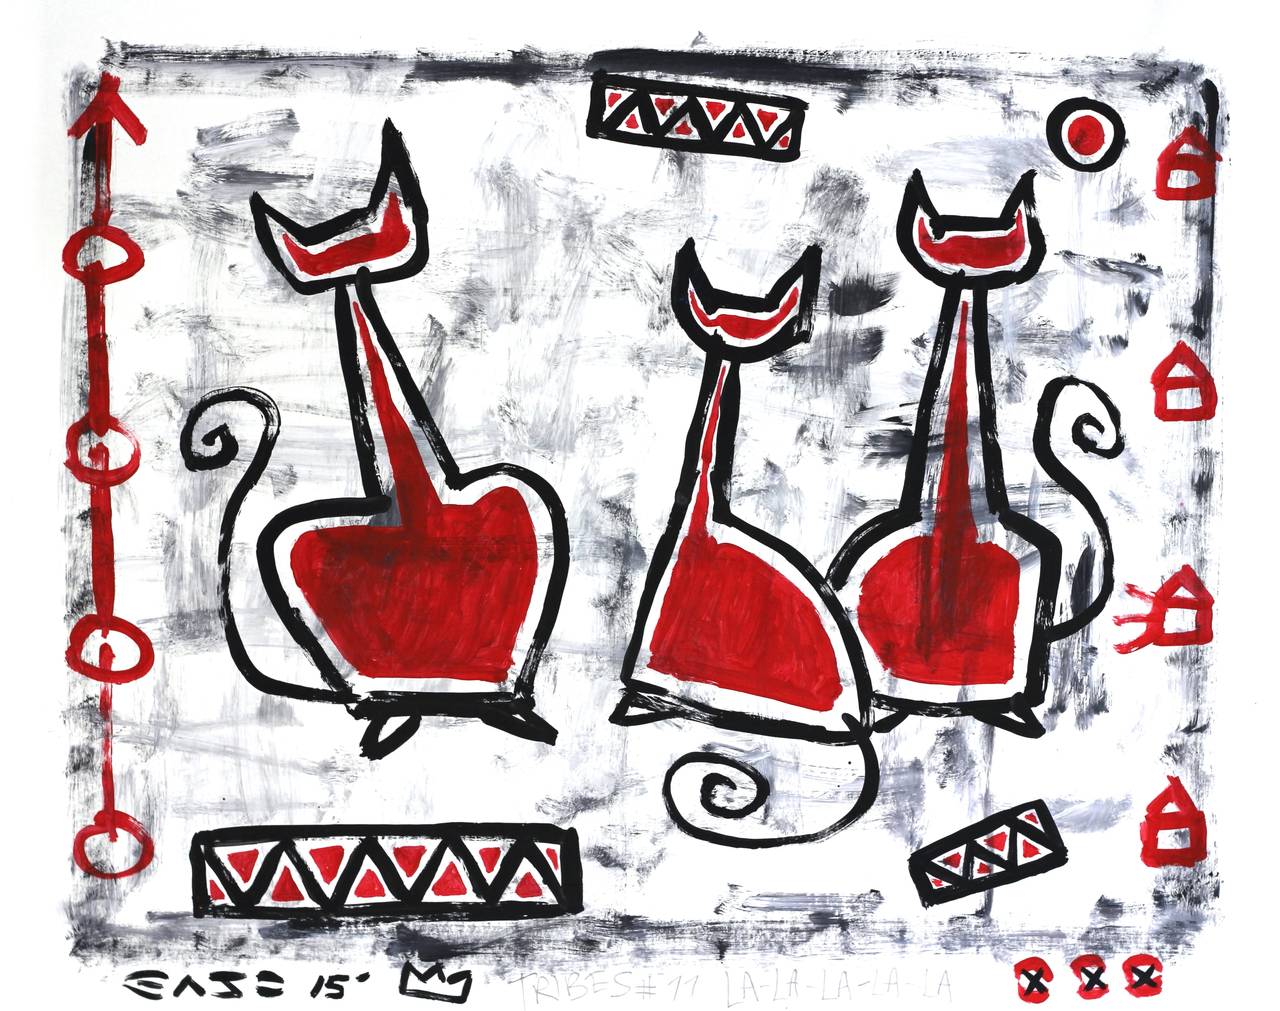 Best Friends - Three Red Cats Figurative Abstract Art by Street Artist Gary John